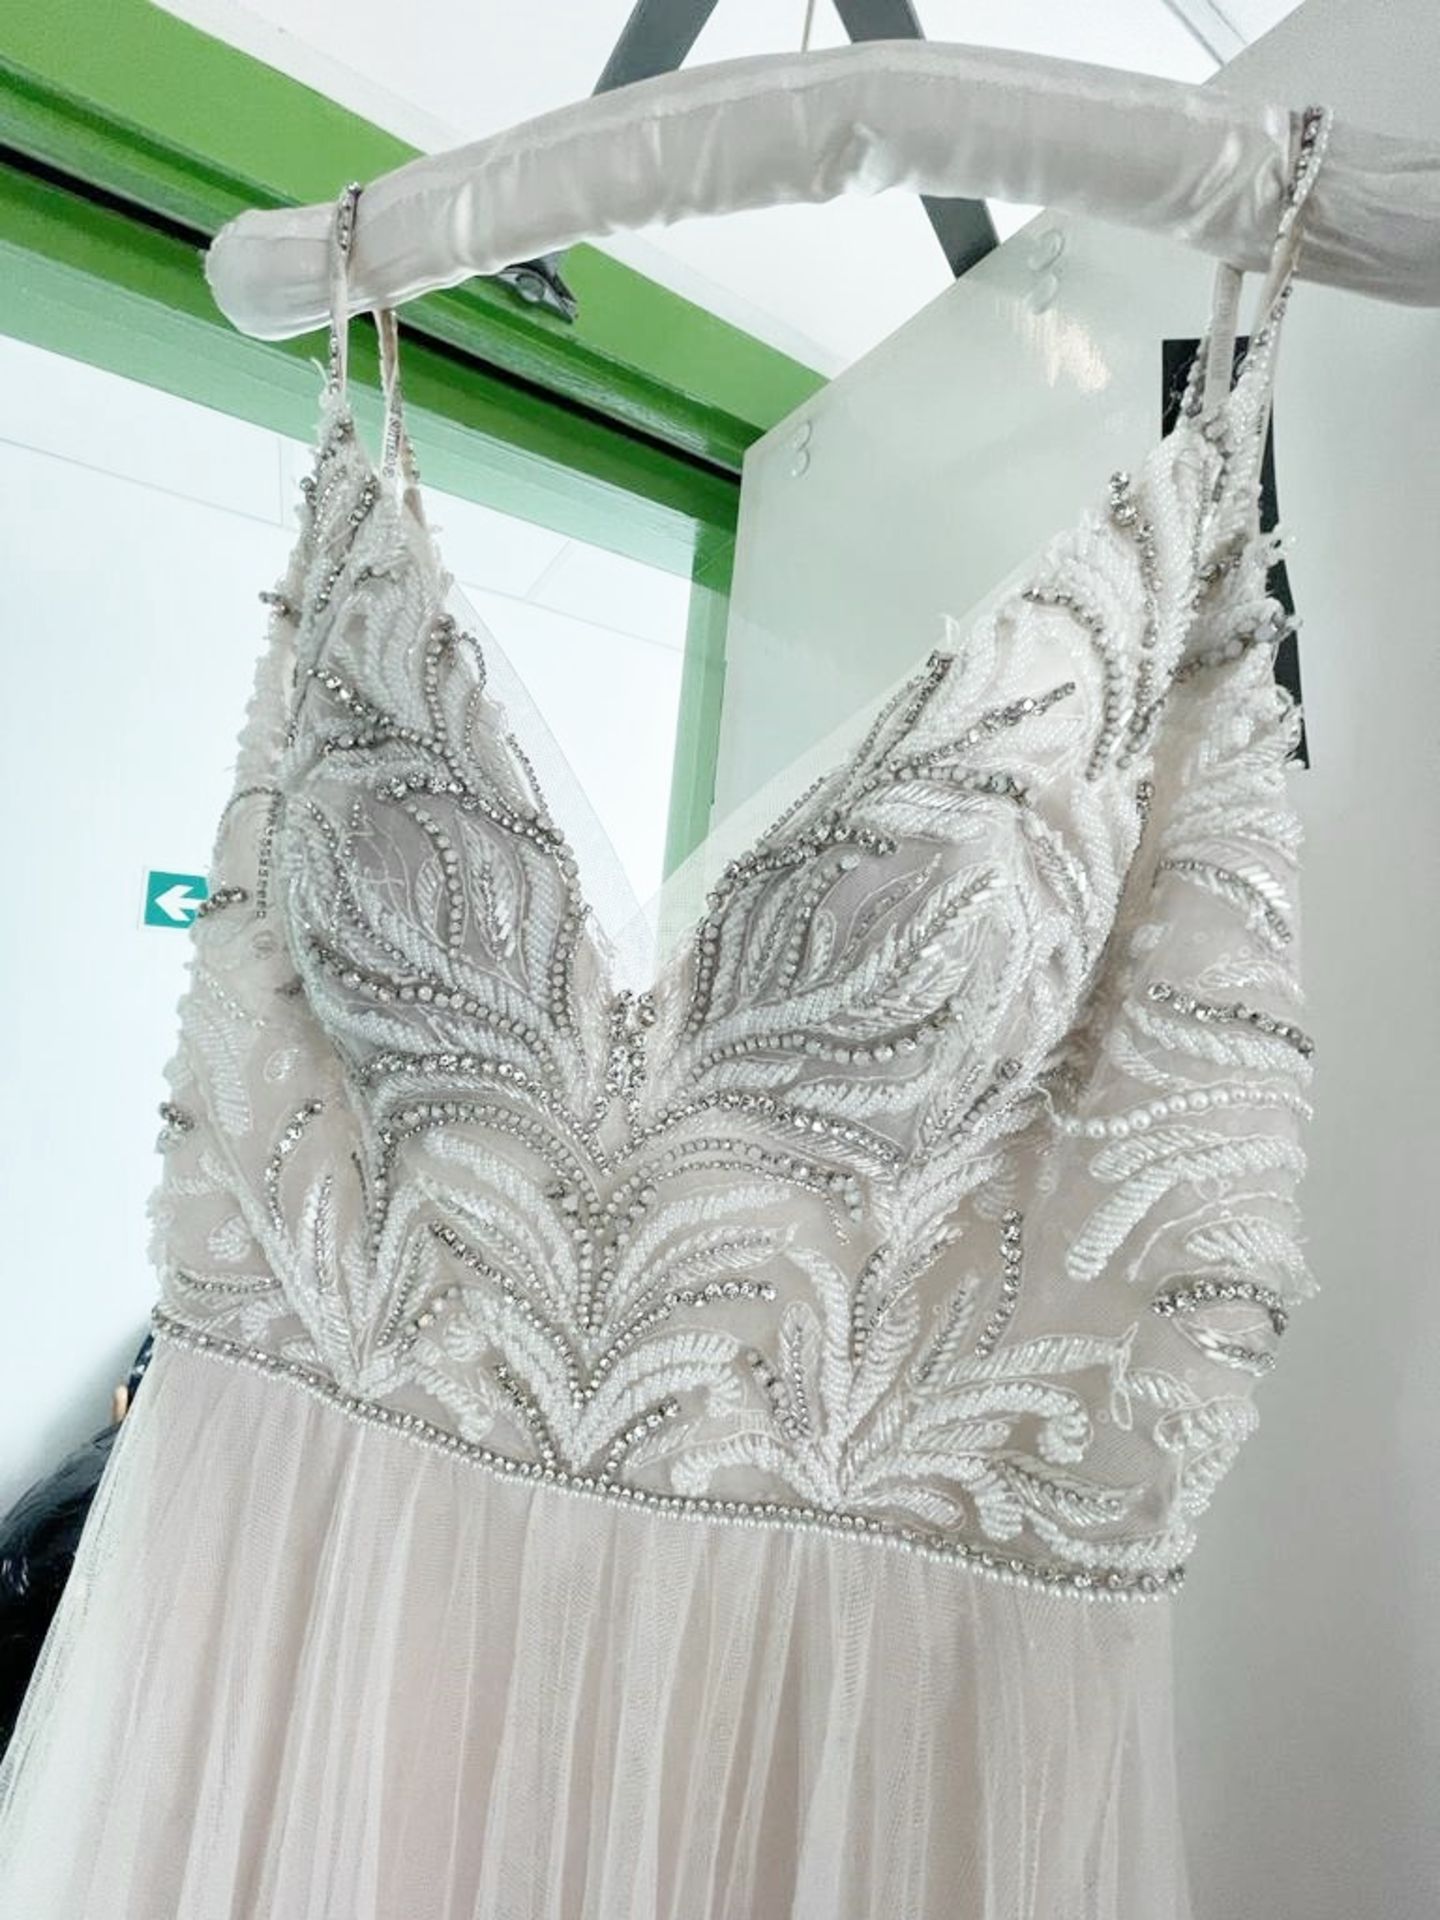 1 x MAGGIE SOTTERO 'Charlene' Boho-Style Aline Designer Wedding Dress Bridal Gown - RRP £1,900 - Image 3 of 15